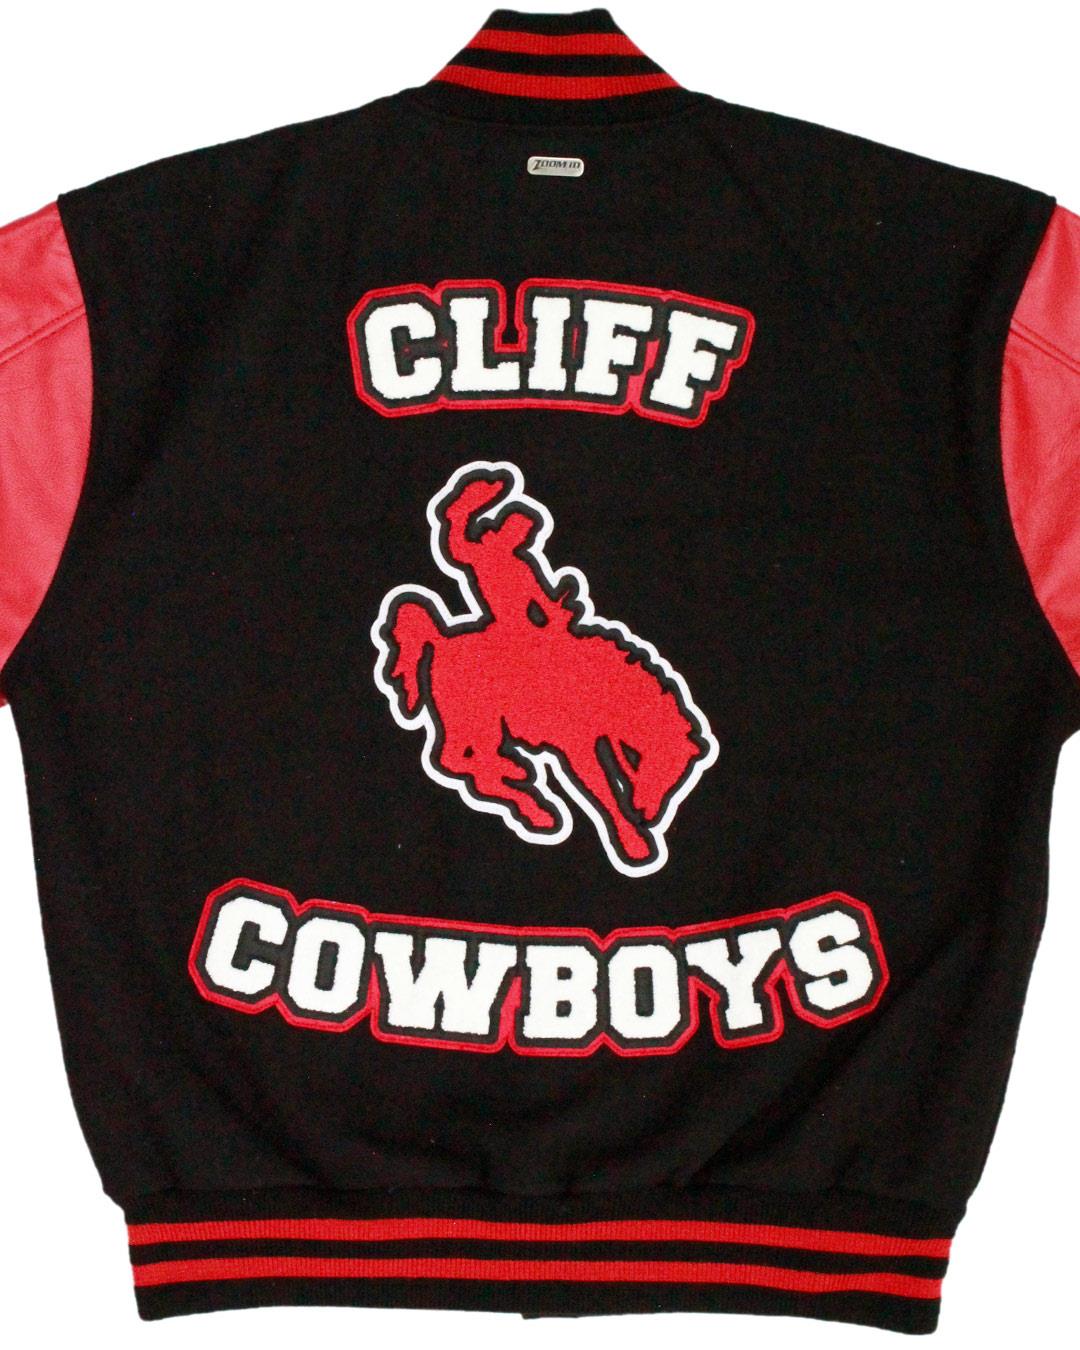 Cliff High School Cowboys/Cowgirls Lettermen Jacket, Cliff, NM - Back